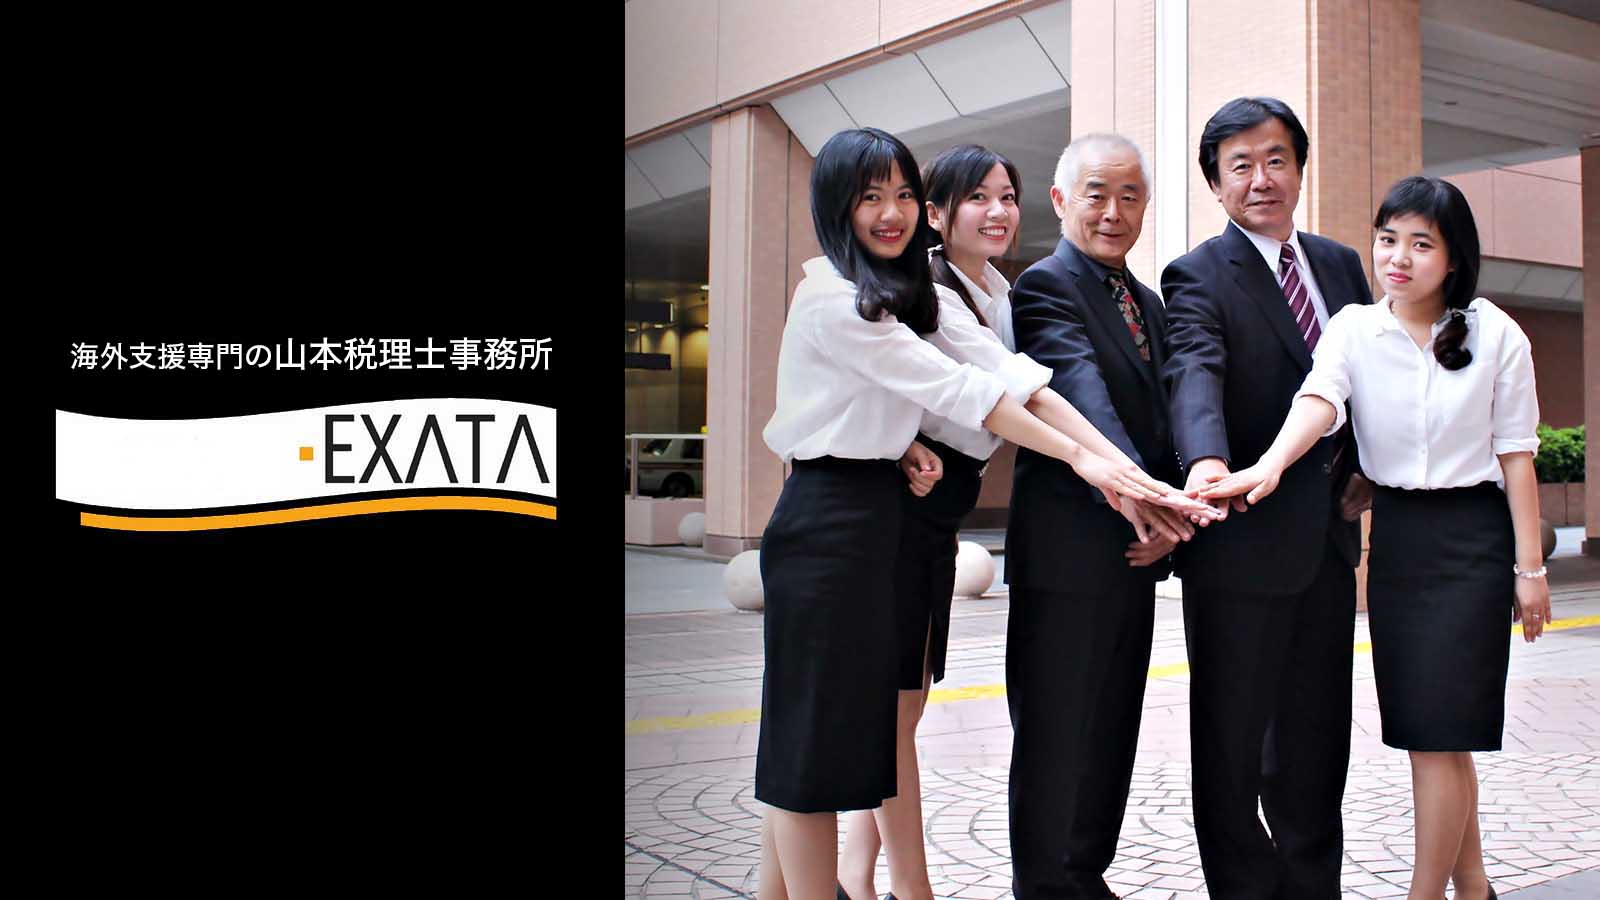 EXATA(エザータ)海外支援専門の税理士事務所。